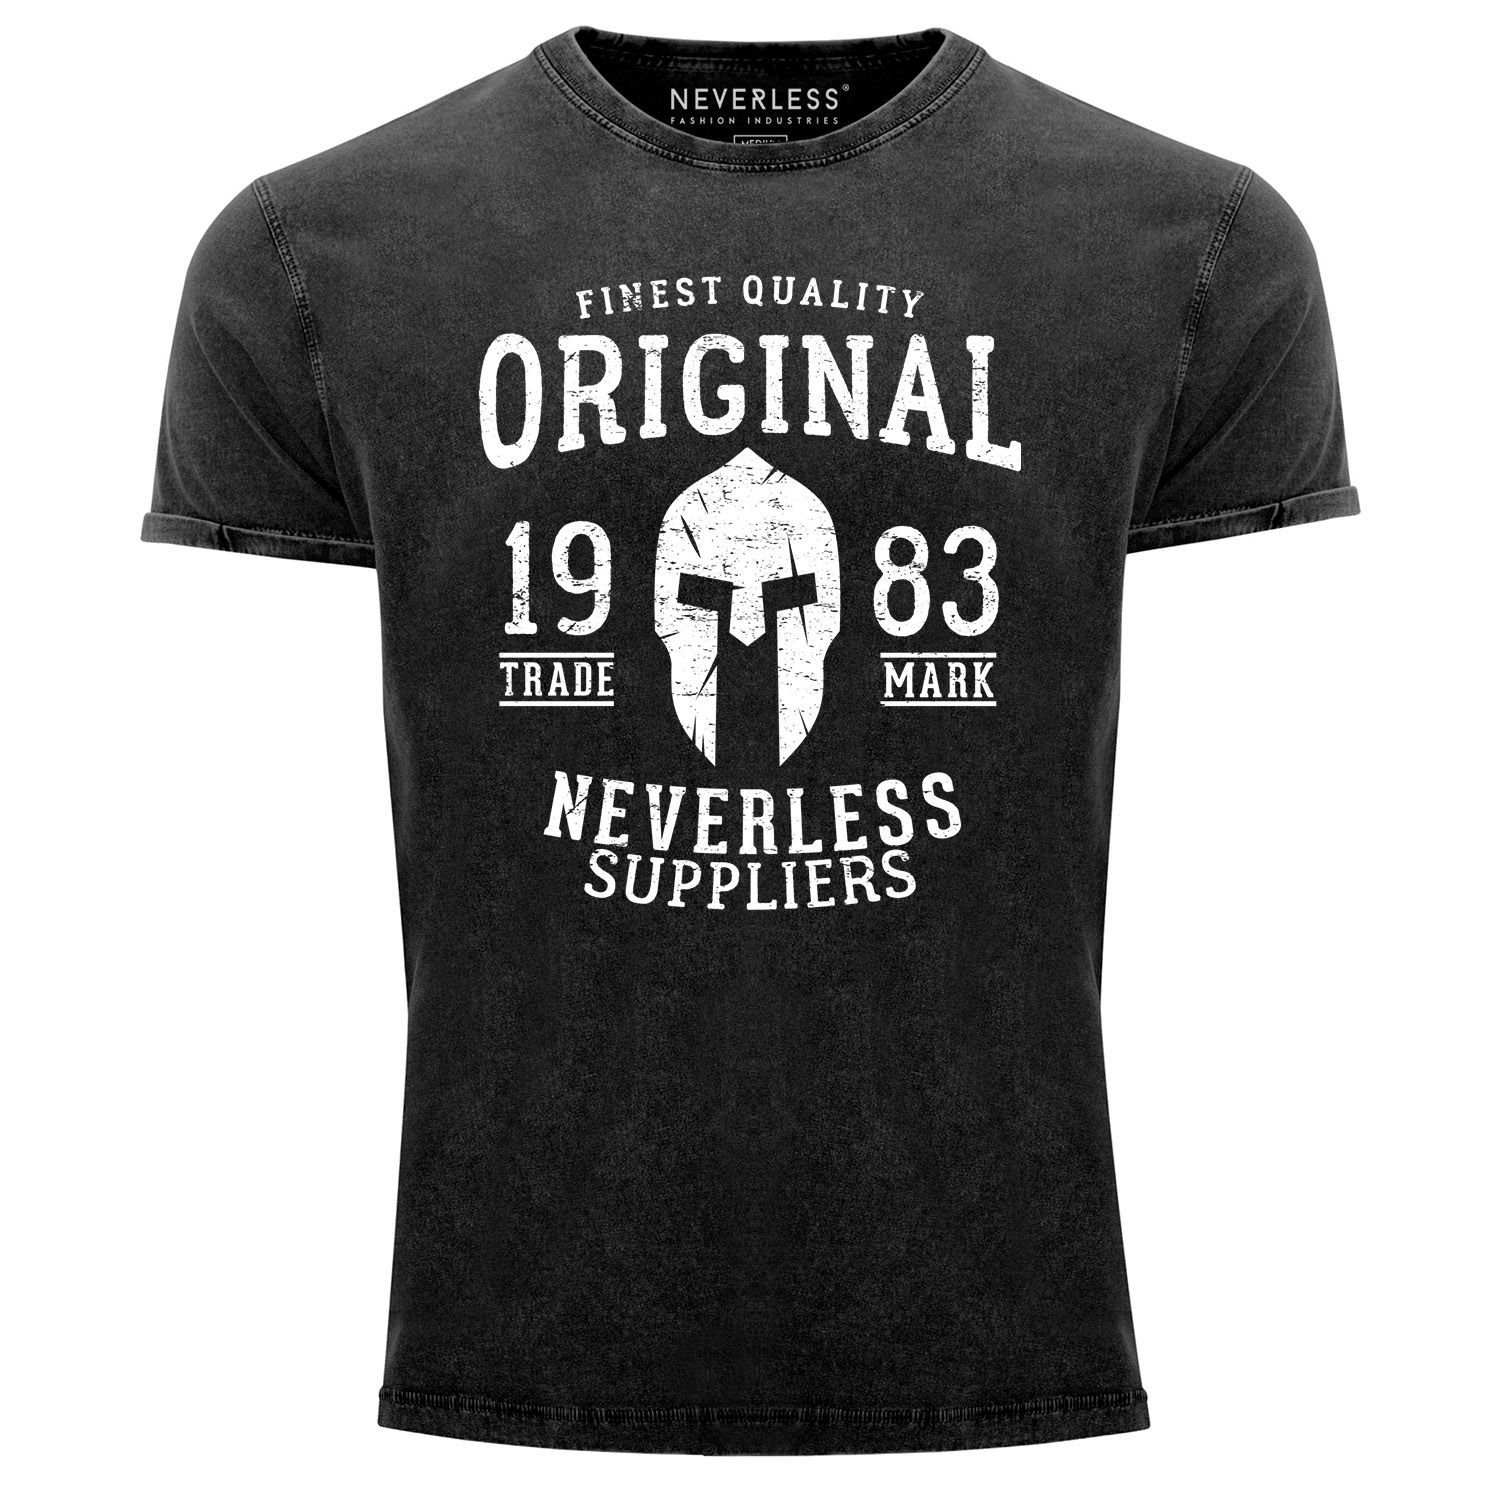 Neverless Print-Shirt Cooles Angesagtes Herren T-Shirt Vintage Shirt Original Gladiator Aufdruck Used Look Slim Fit Neverless® mit Print